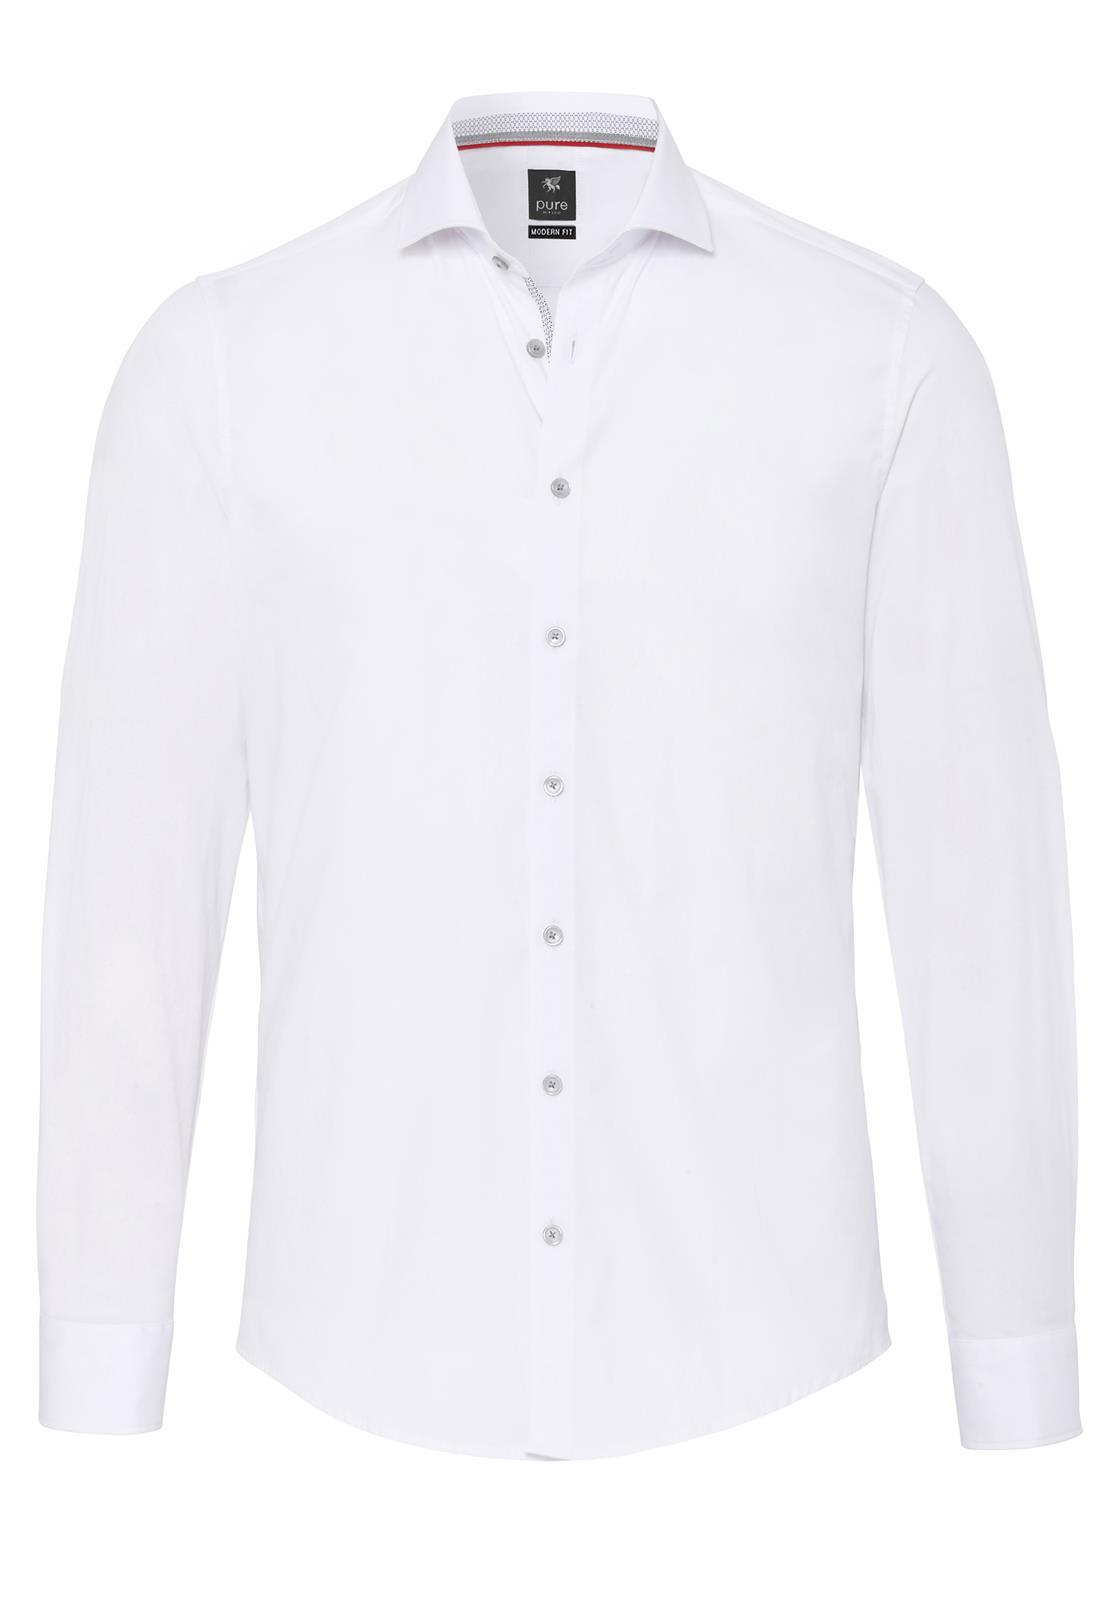 PURE- City Hemd modern fit Langarm (Uni Weiß)